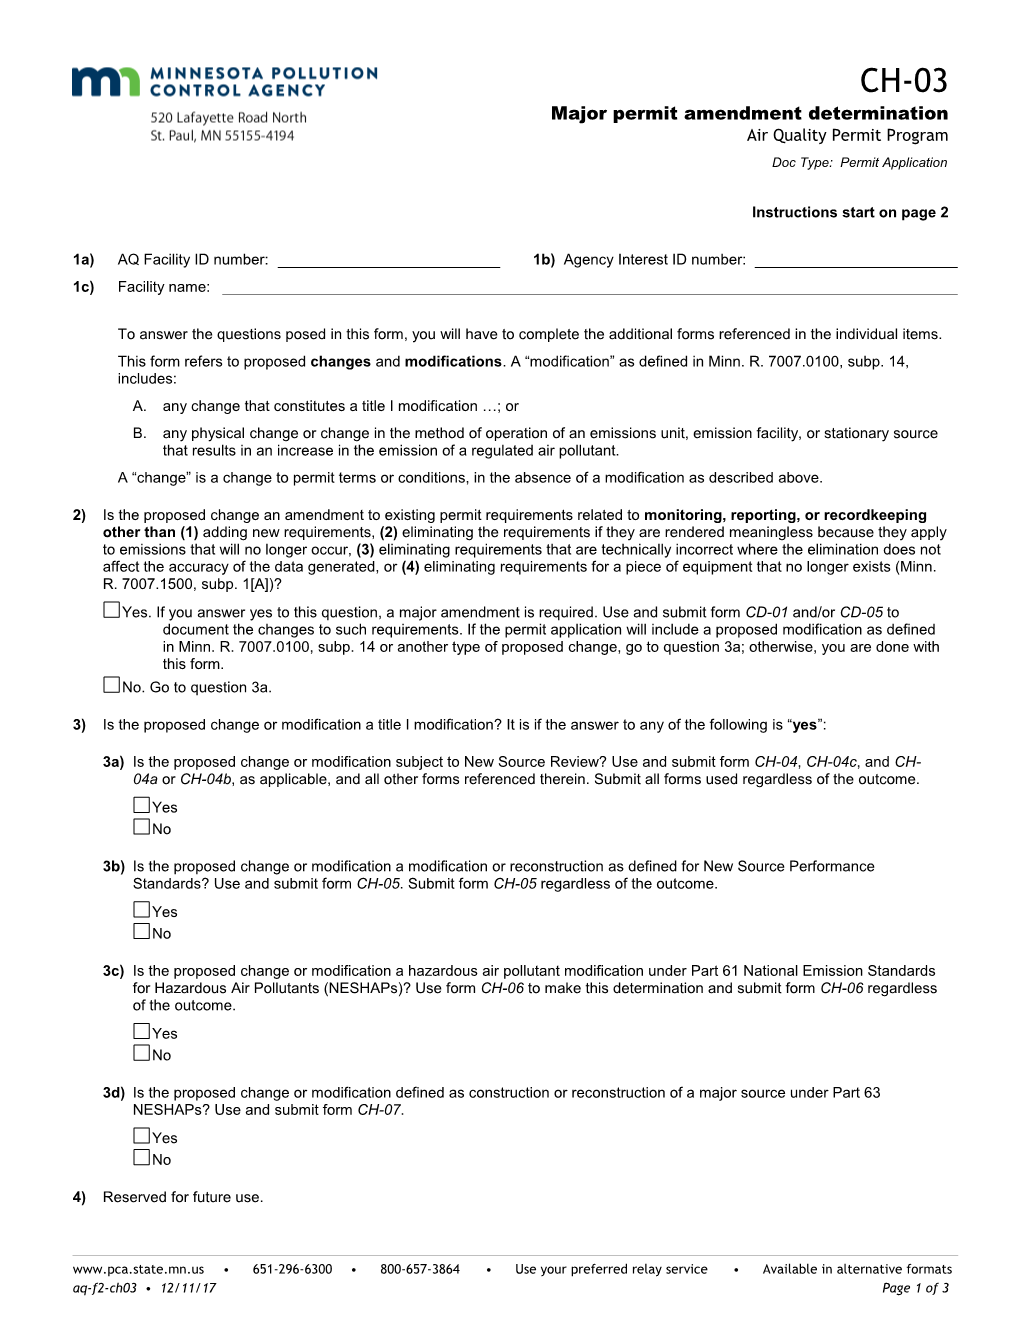 CH-03 Major Permit Amendment Determination - Air Quality Permit Program - Form